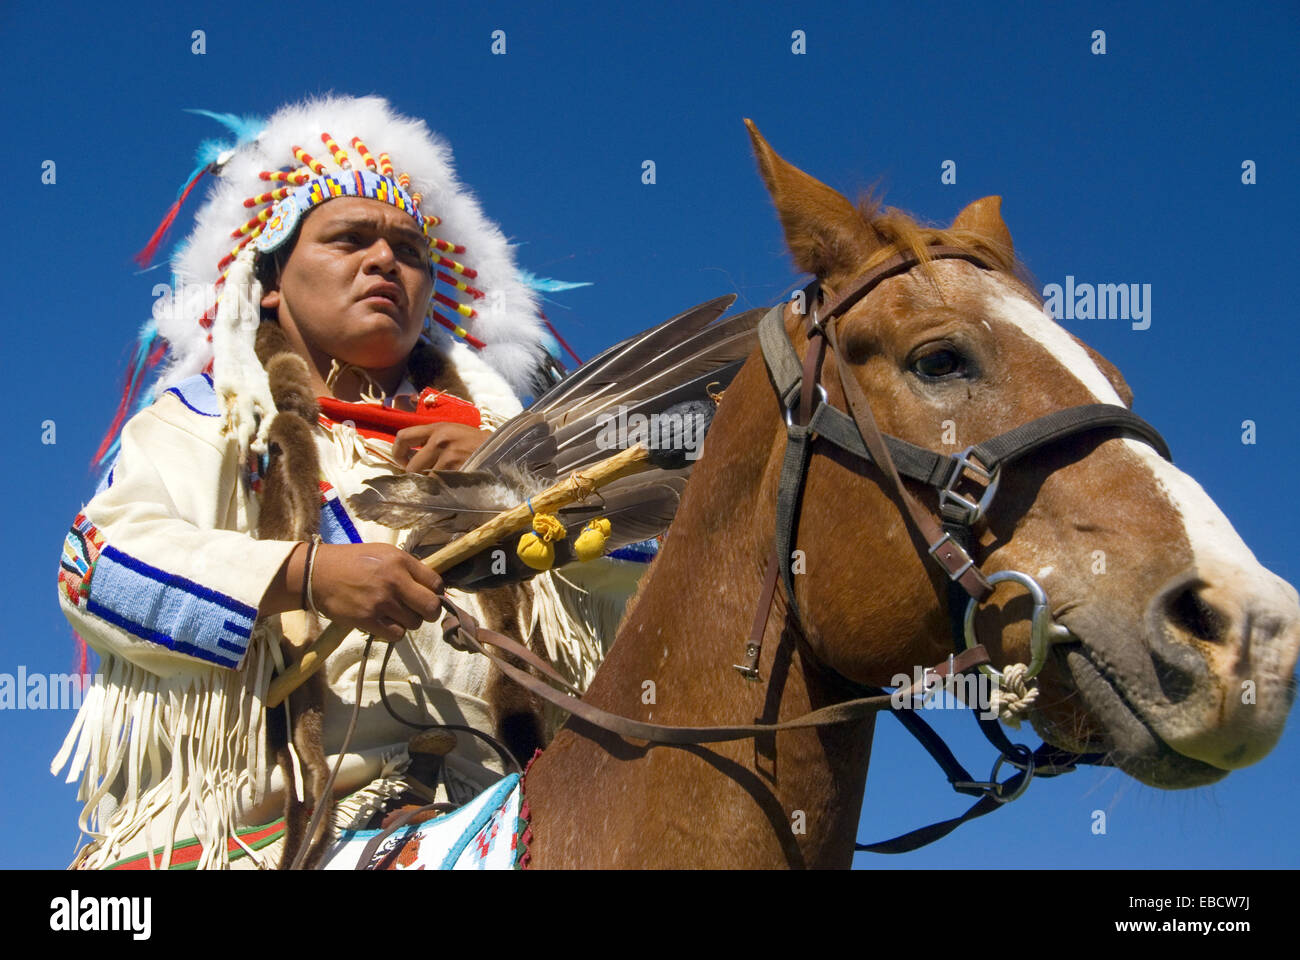 Treaty regalia hi-res stock photography and images - Alamy